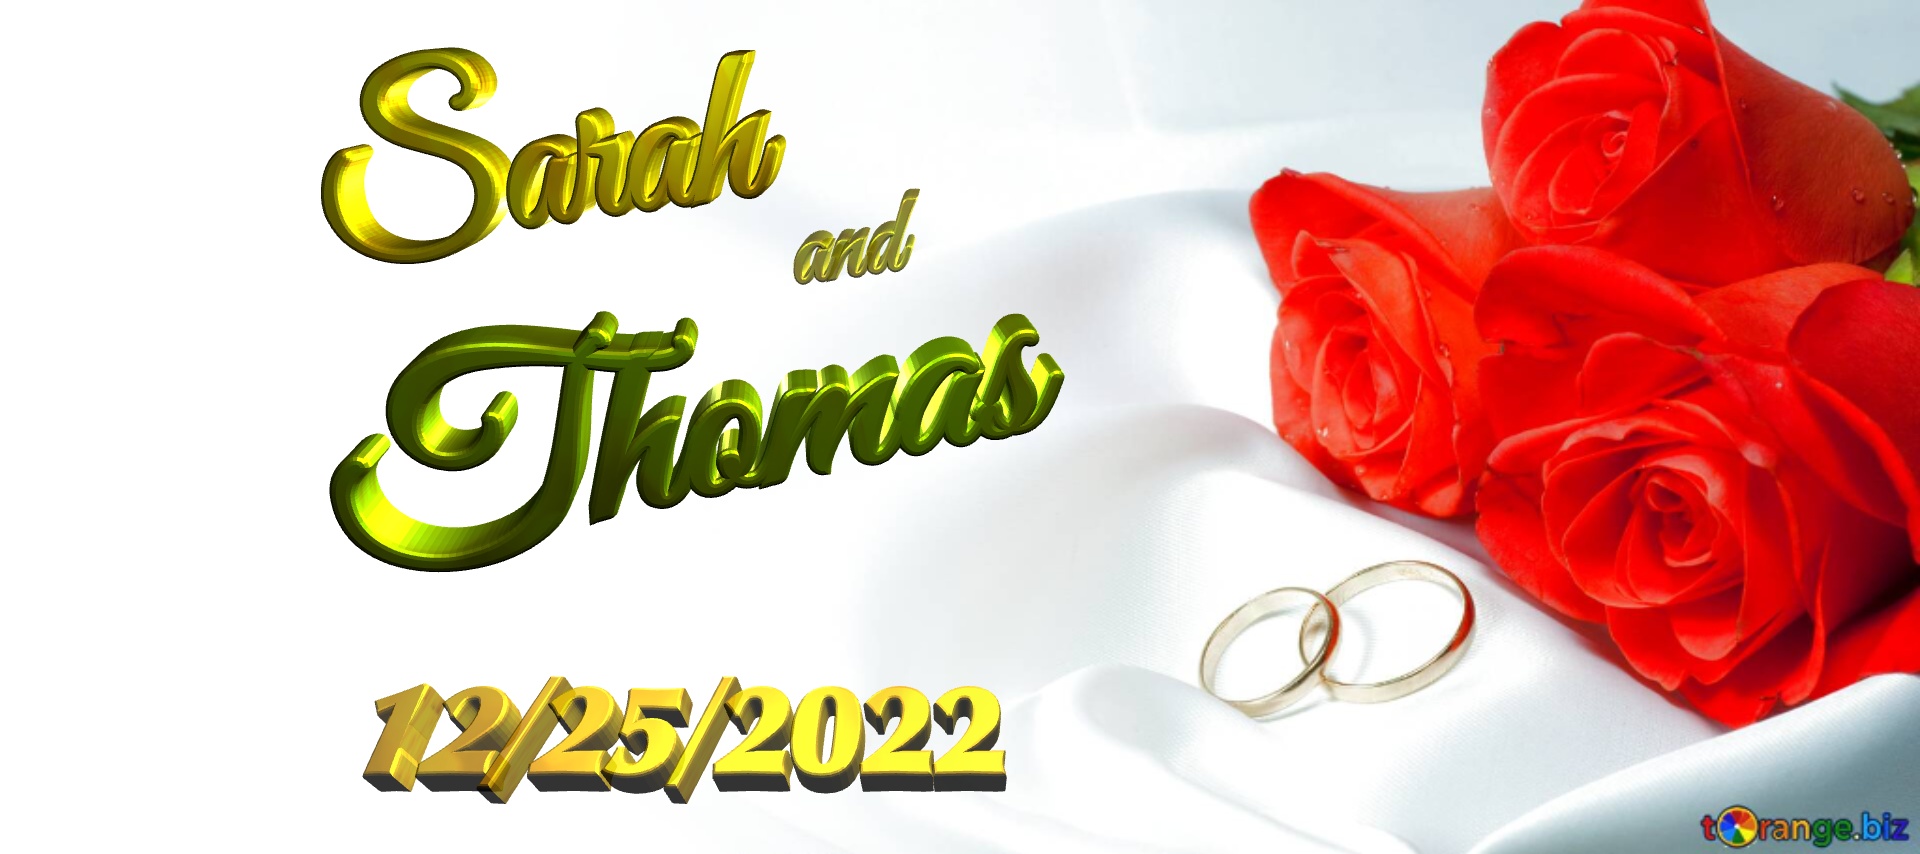 Sarah and Thomas 12/25/2022  Invitation wedding background №0